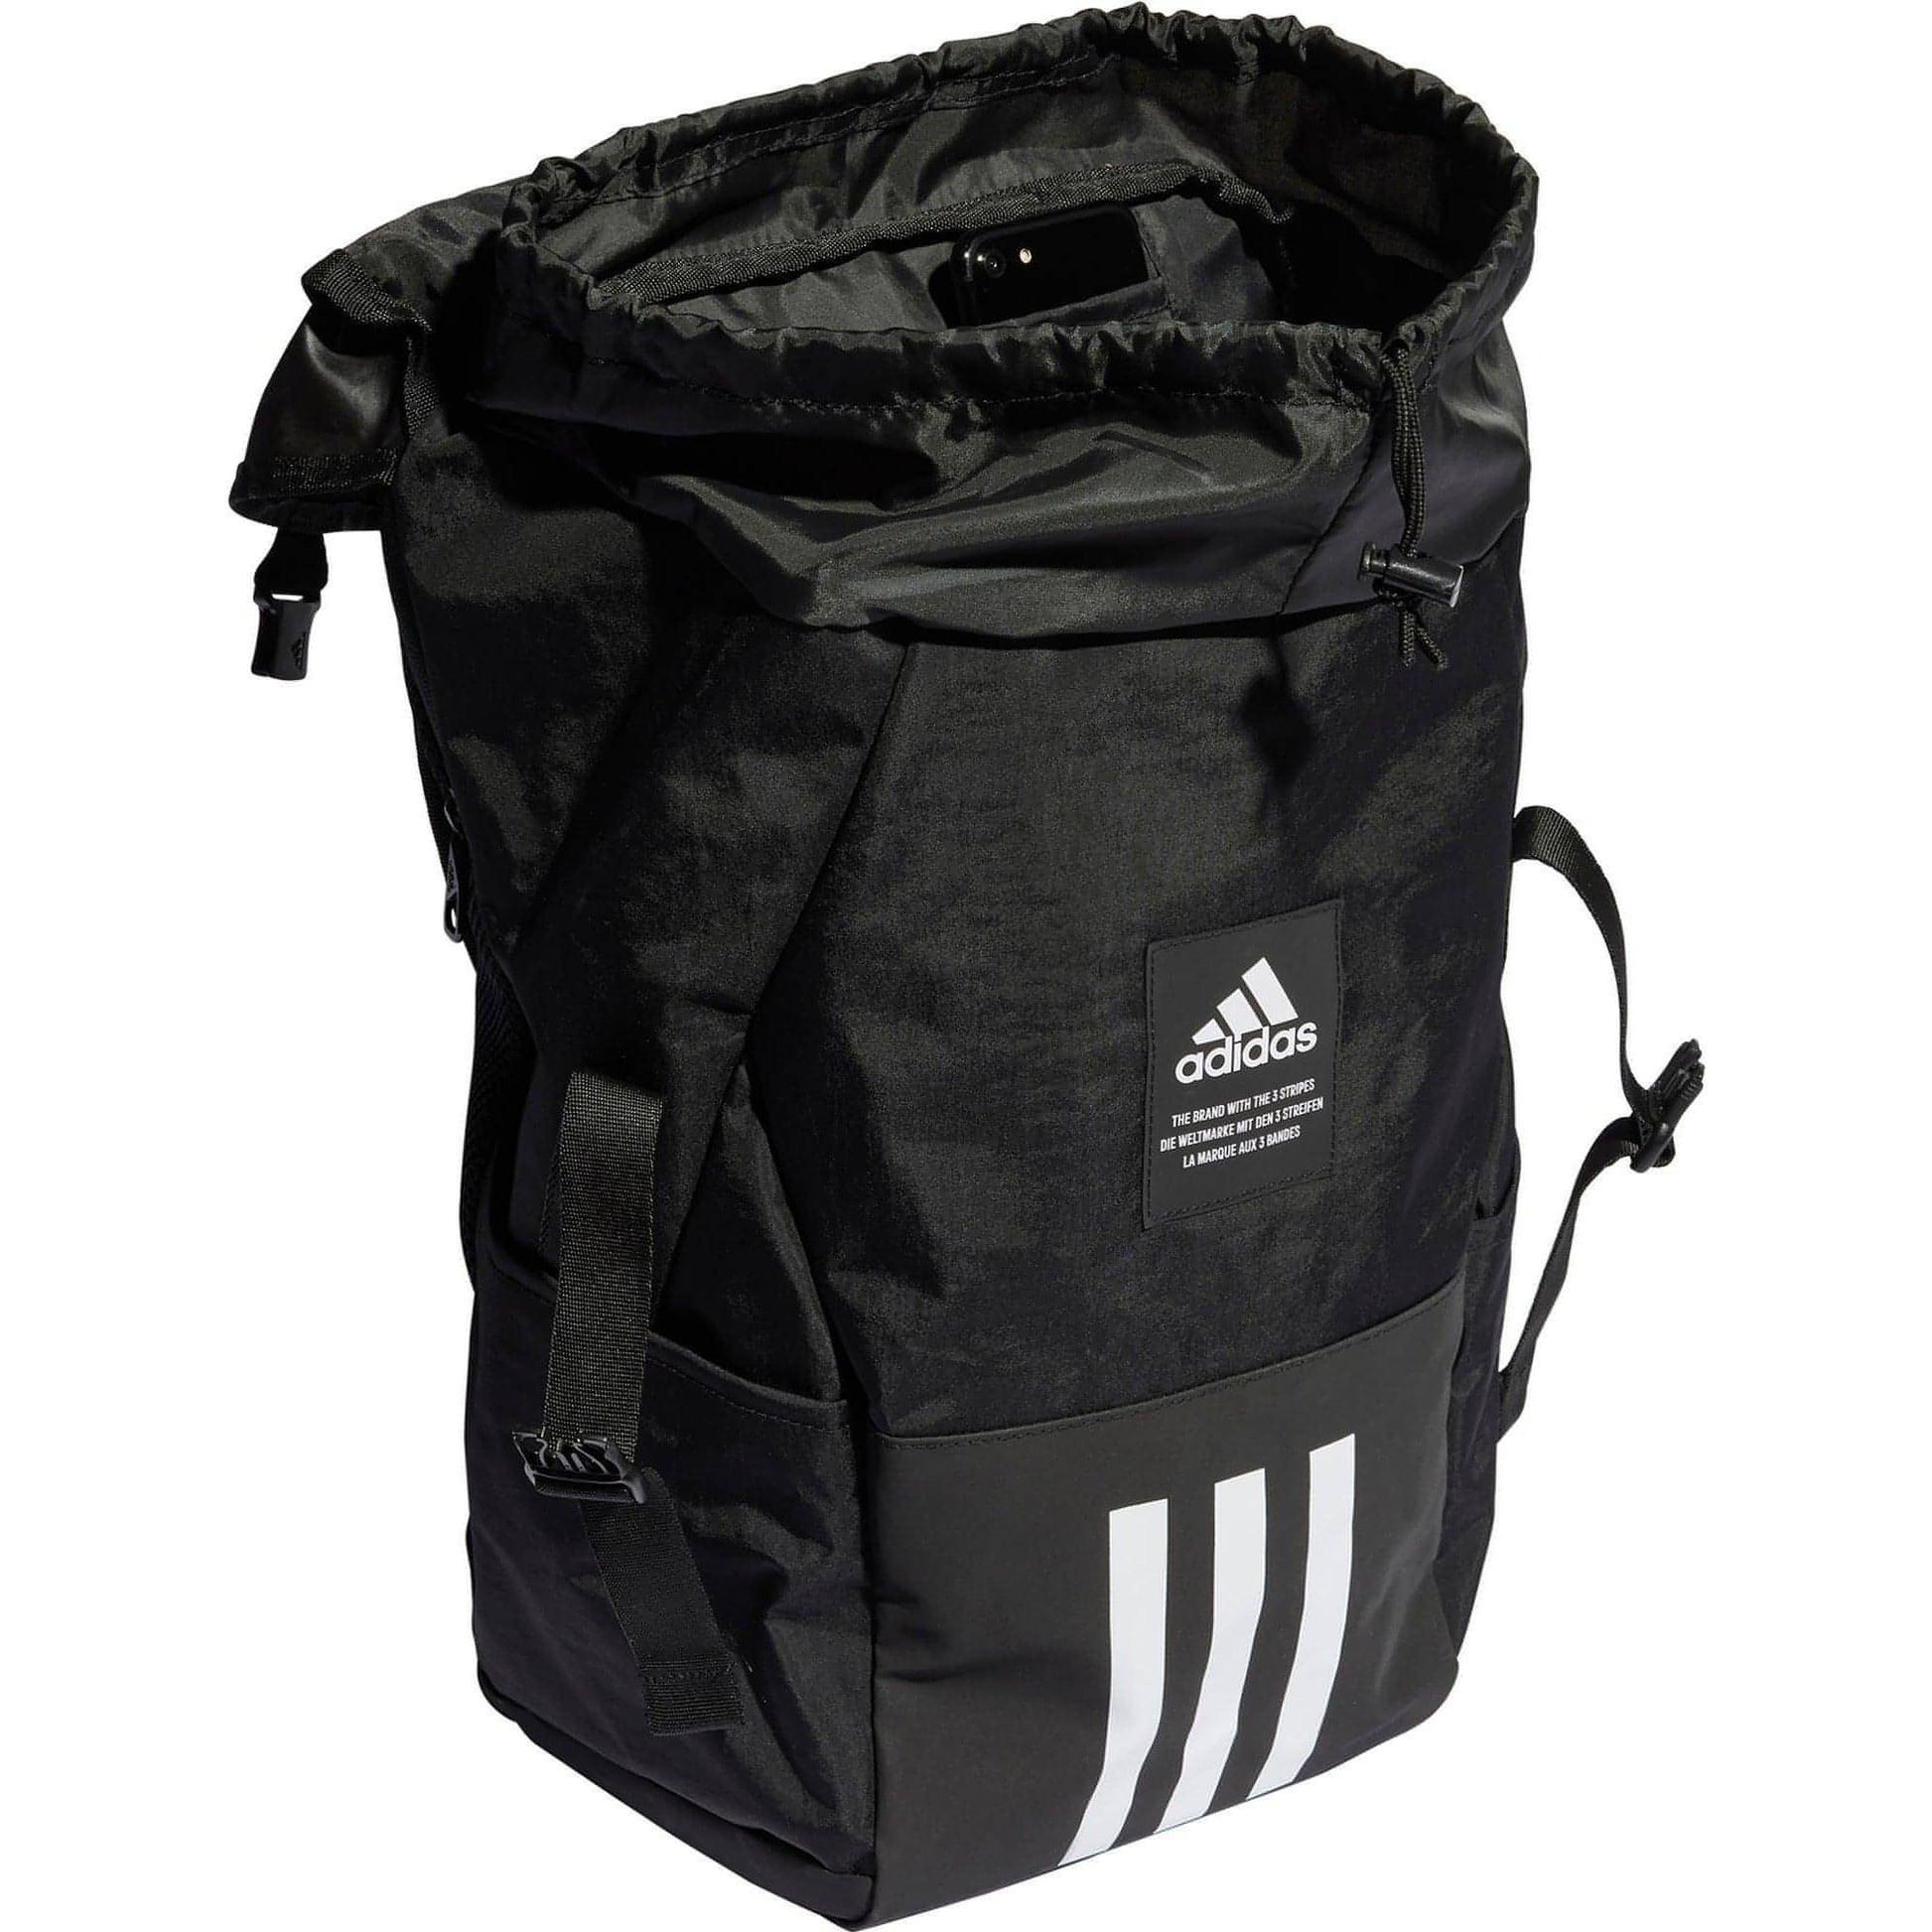 Adidas 4Athlts Camper Backpack Hc7269 Inside - Side View